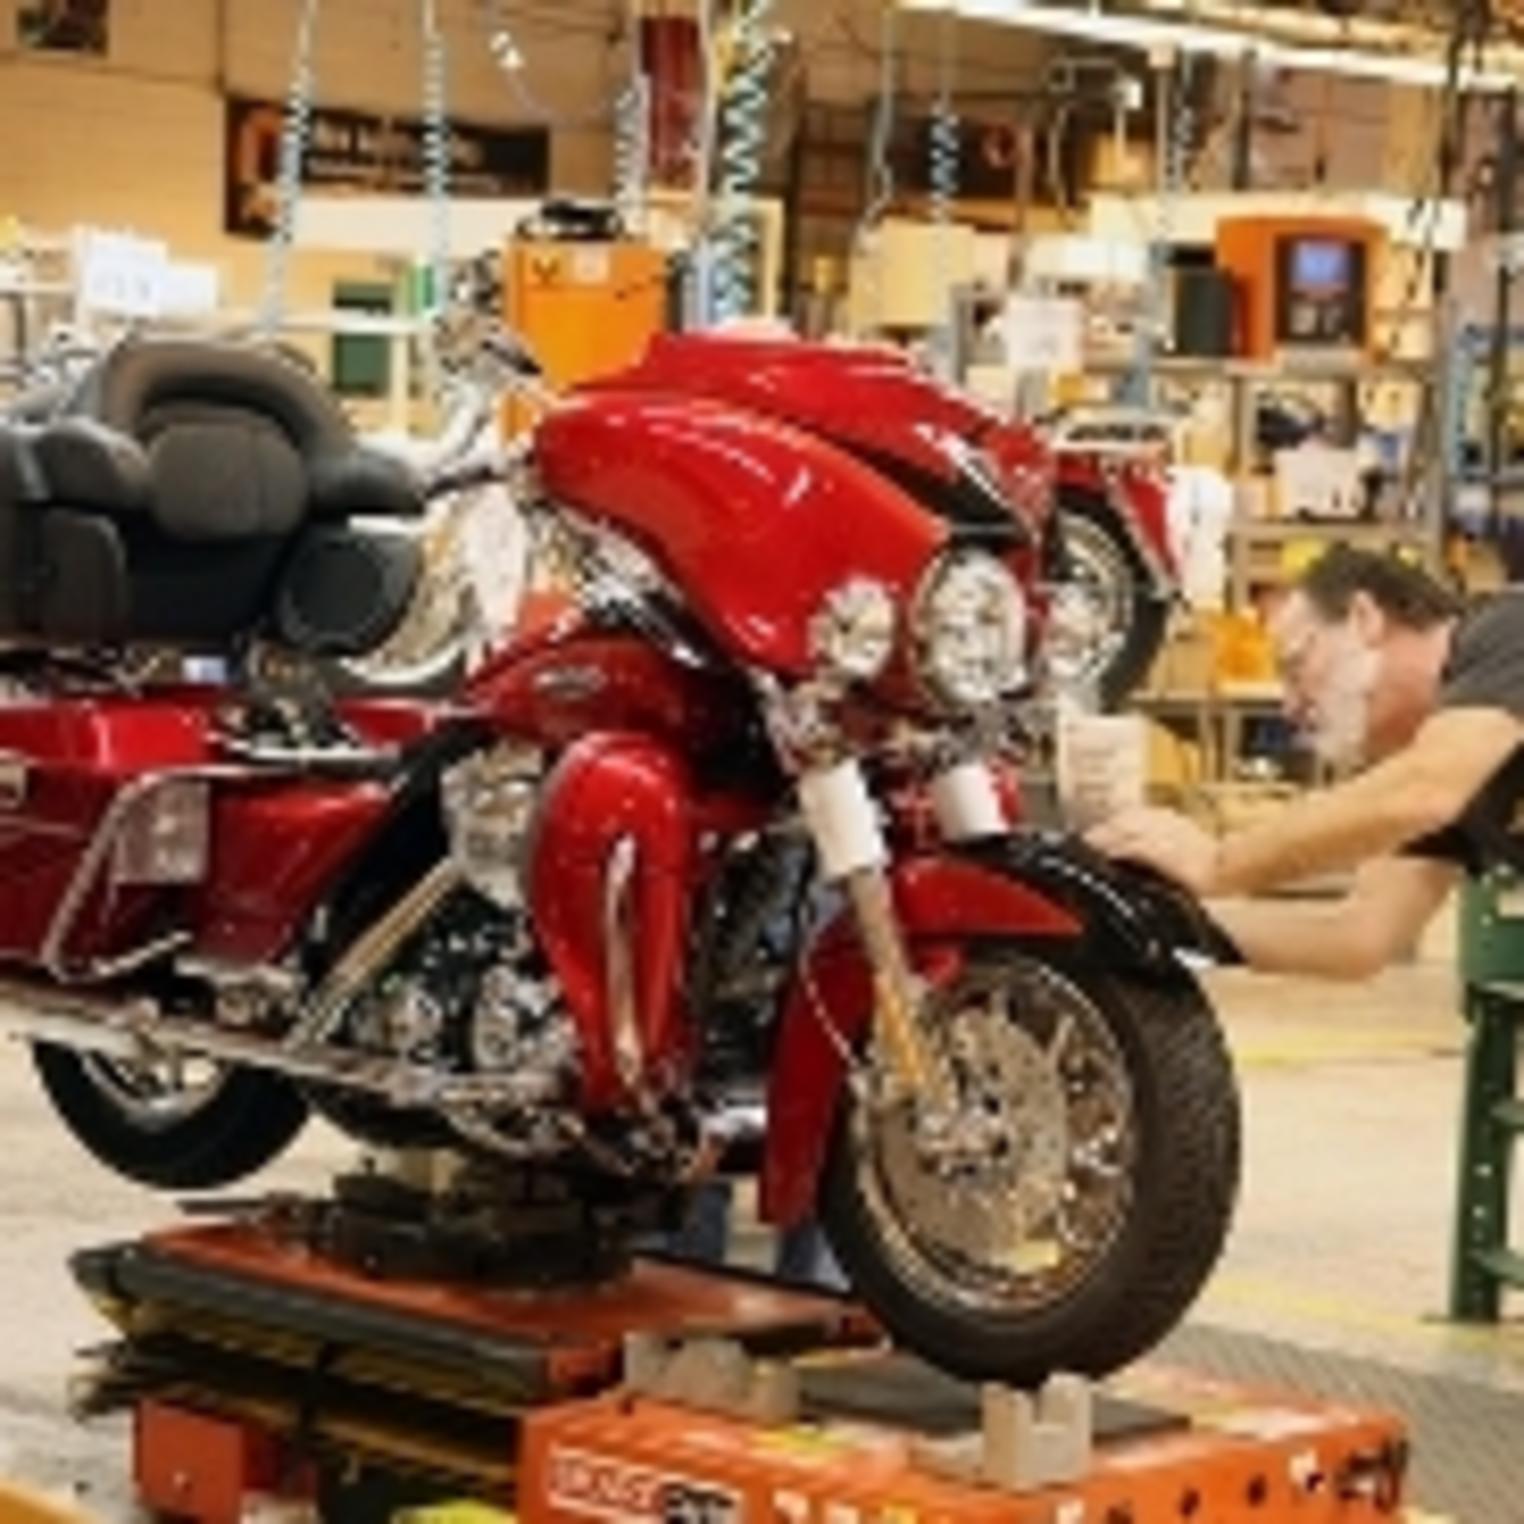 York Harley Davidson Factory Tour